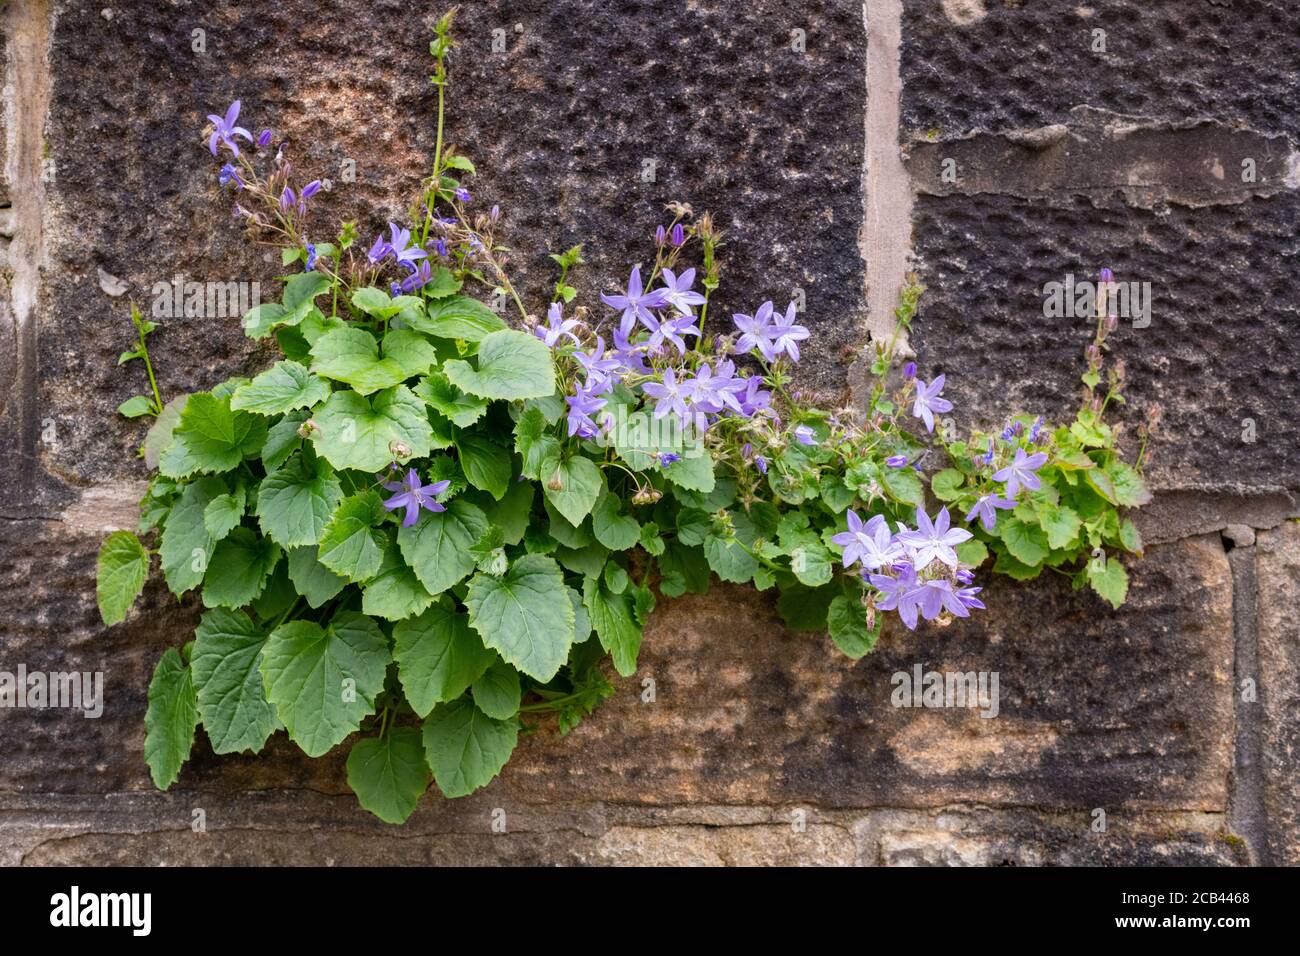 Campanula portenschlagiana or wall bellflower growing on a wall, Glasgow, Scotland, UK Stock Photo